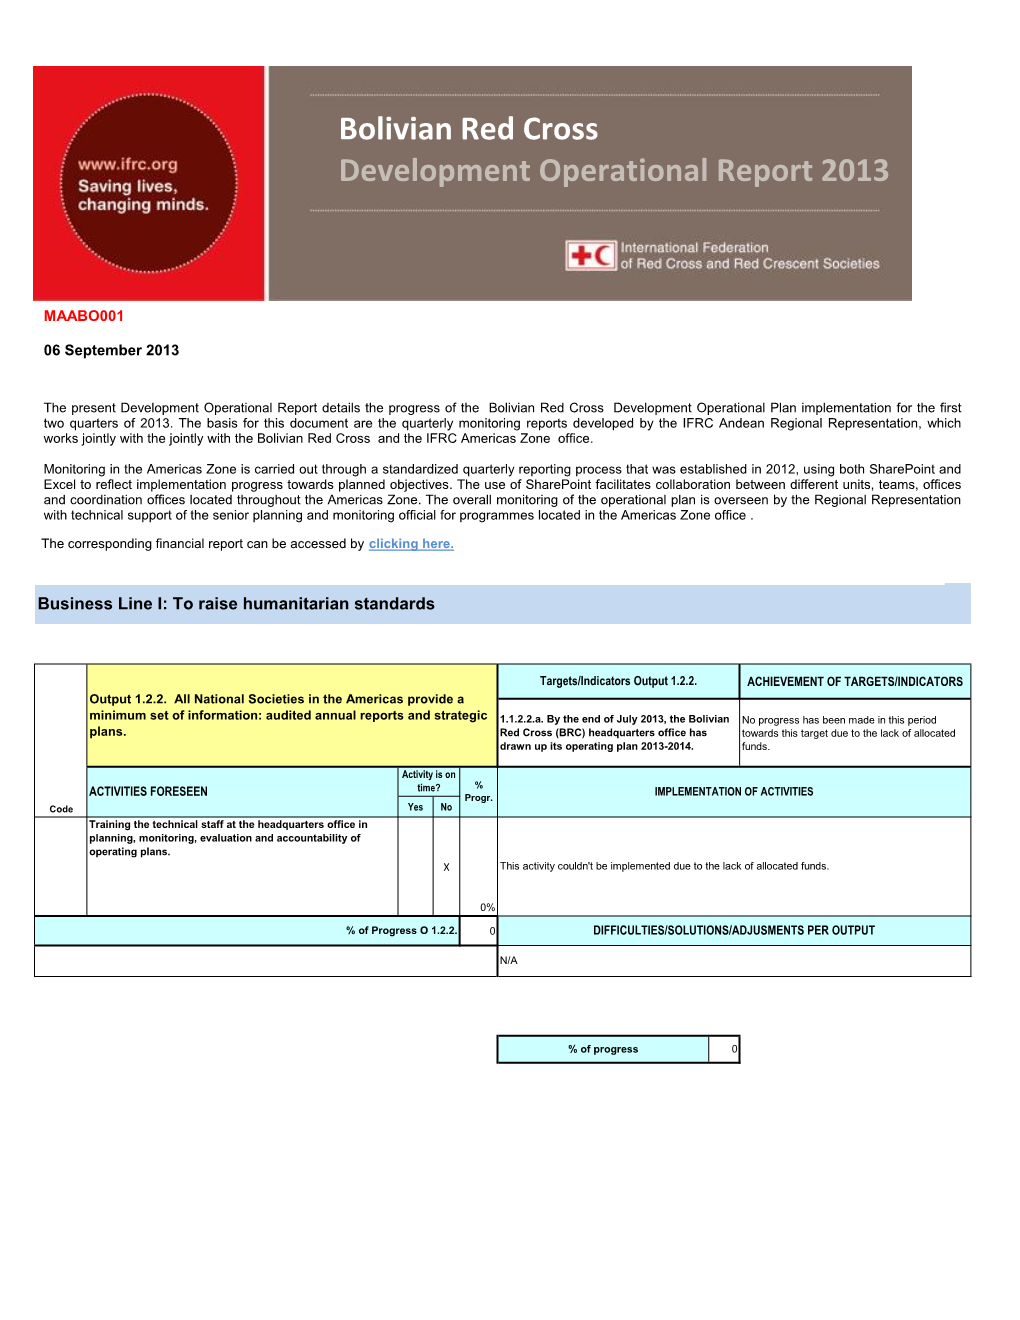 Bolivian Red Cross Development Operational Report 2013